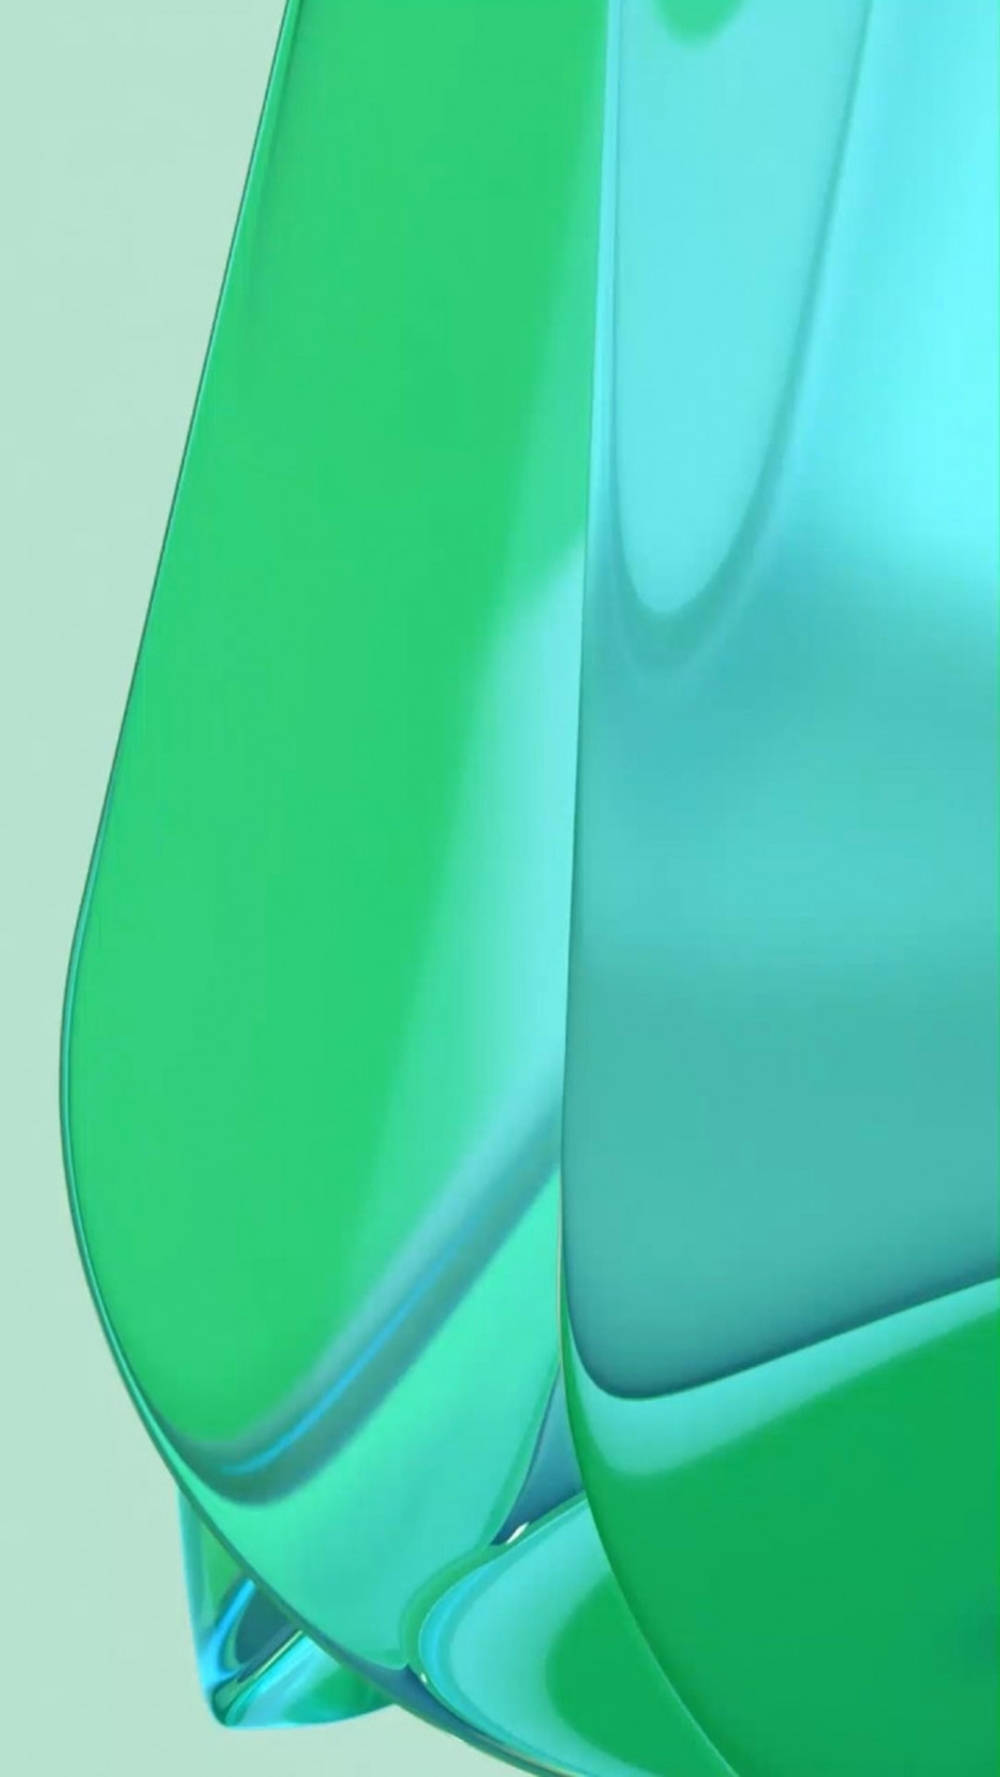 Oneplus 9 Pro Green Jelly Wallpaper